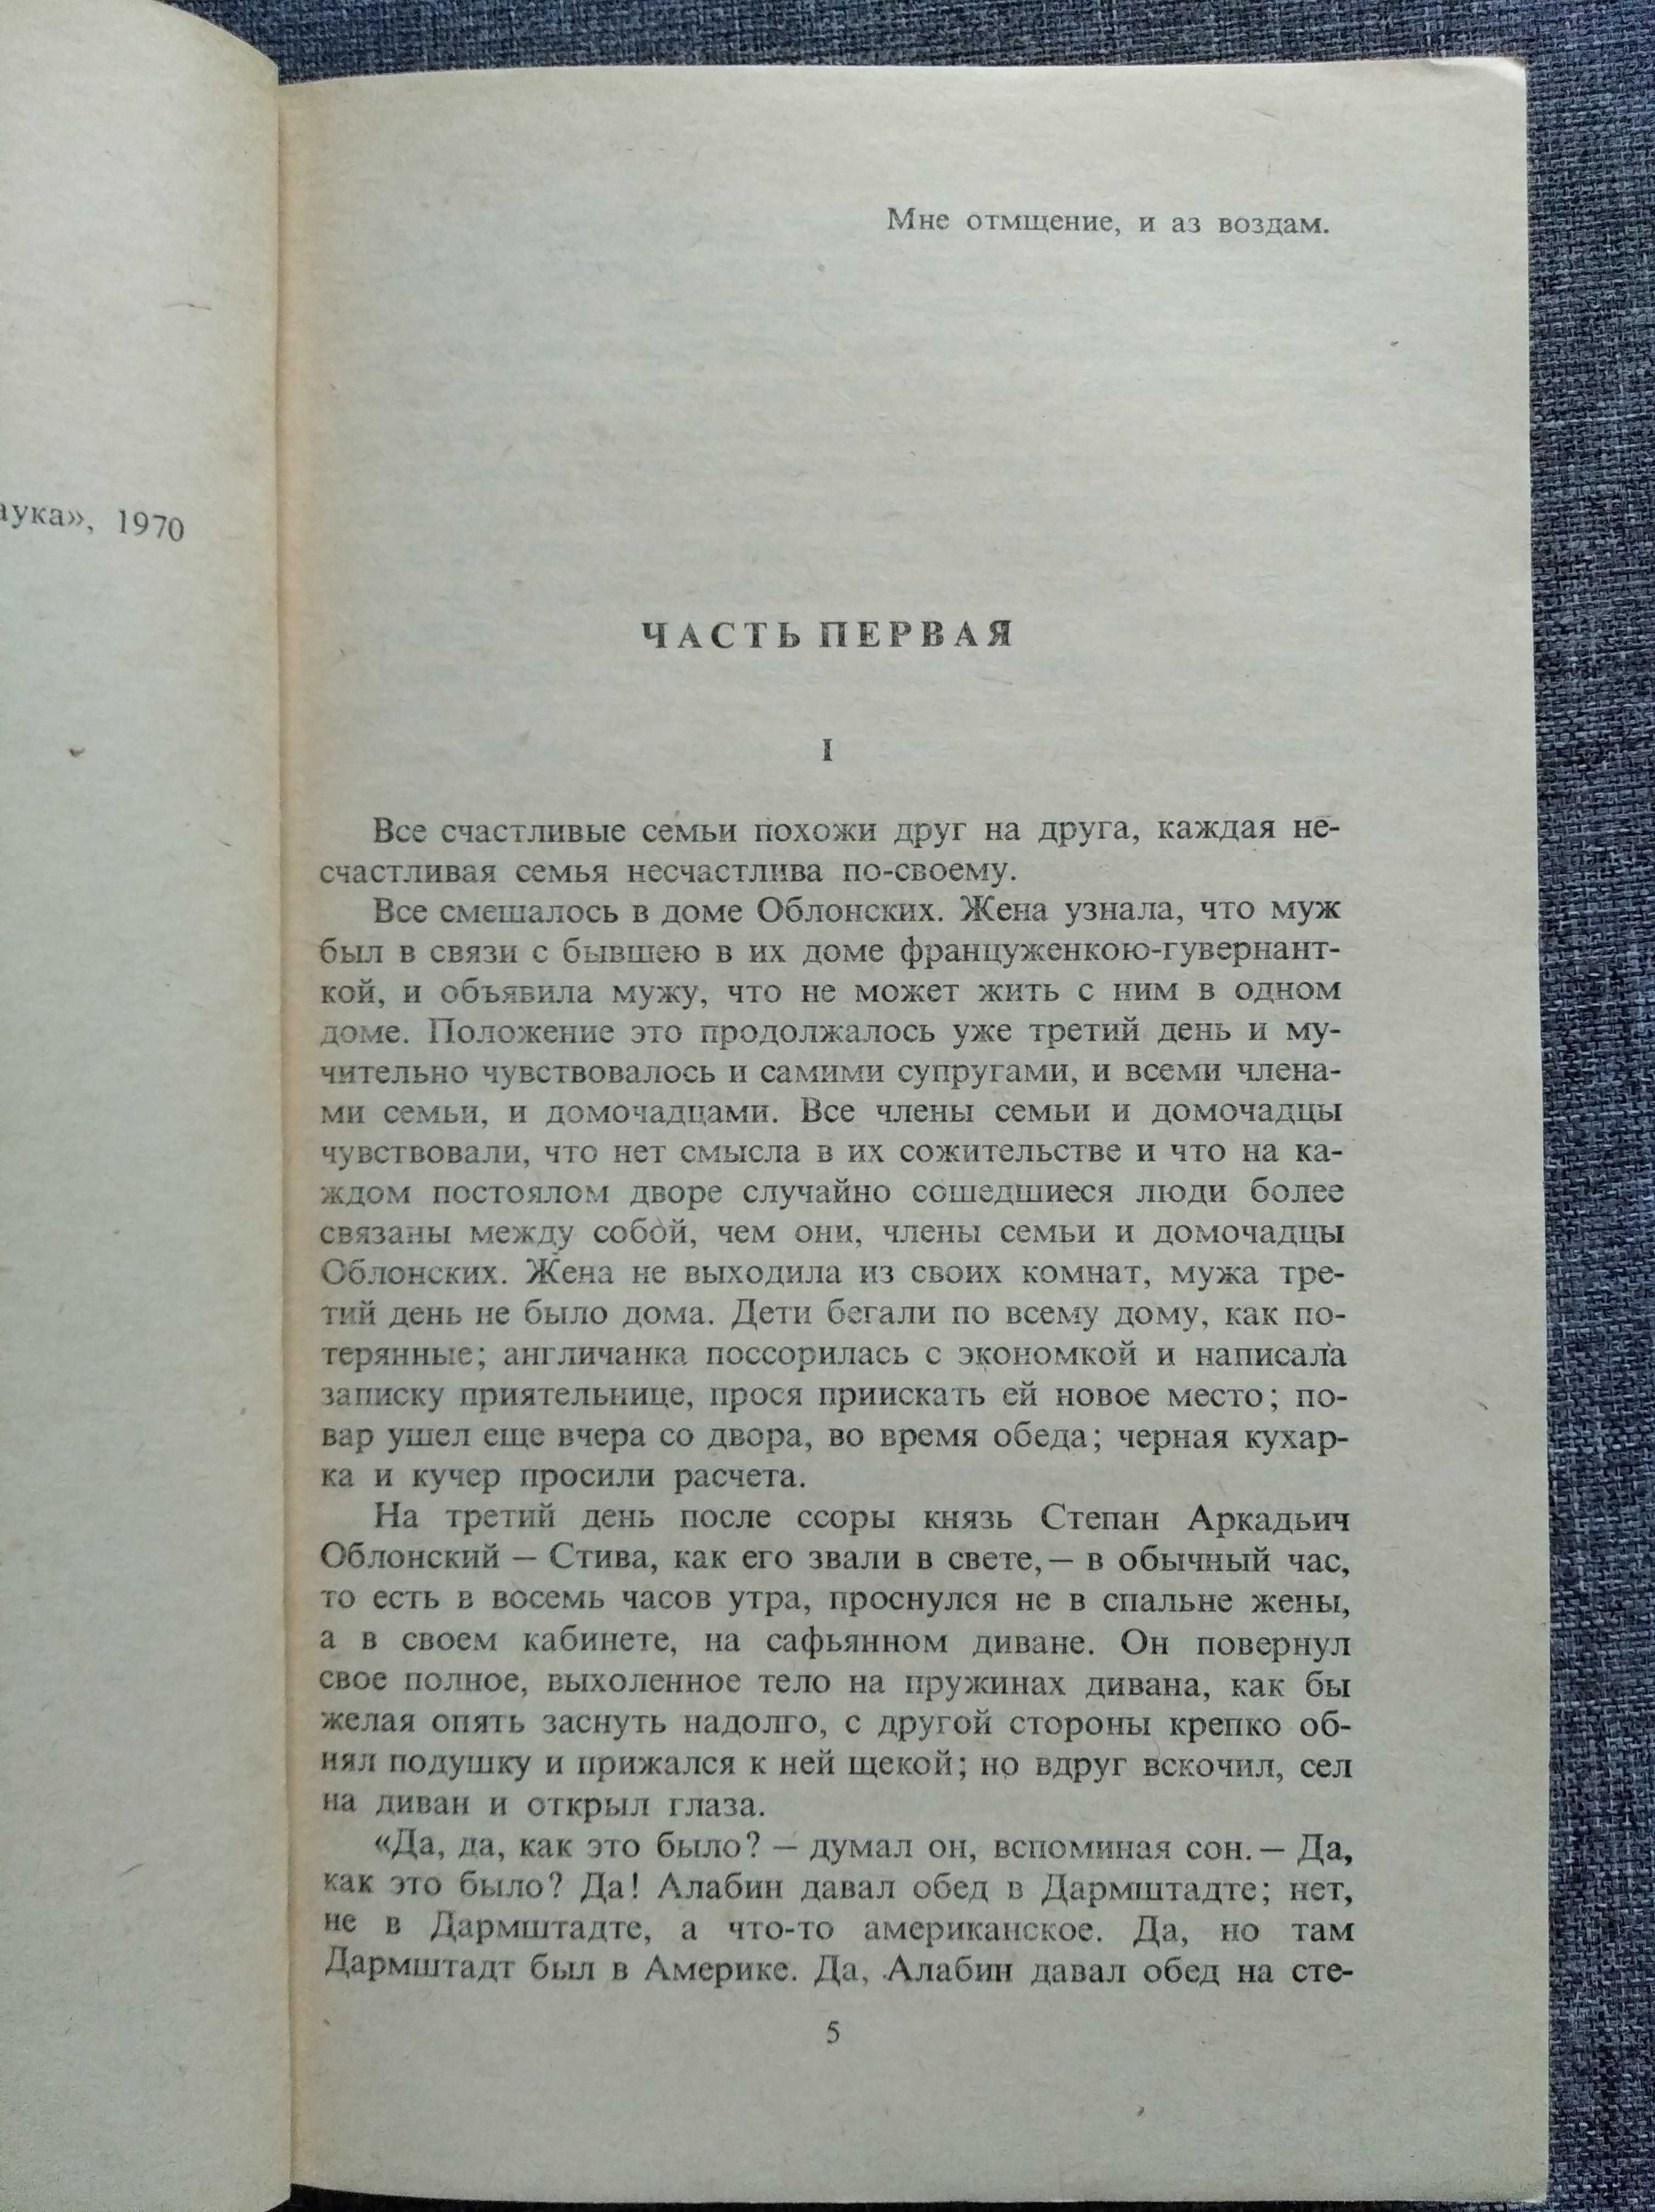 Л. Н. Толстой. "Анна Каренина". 60 грн за 2 тома.